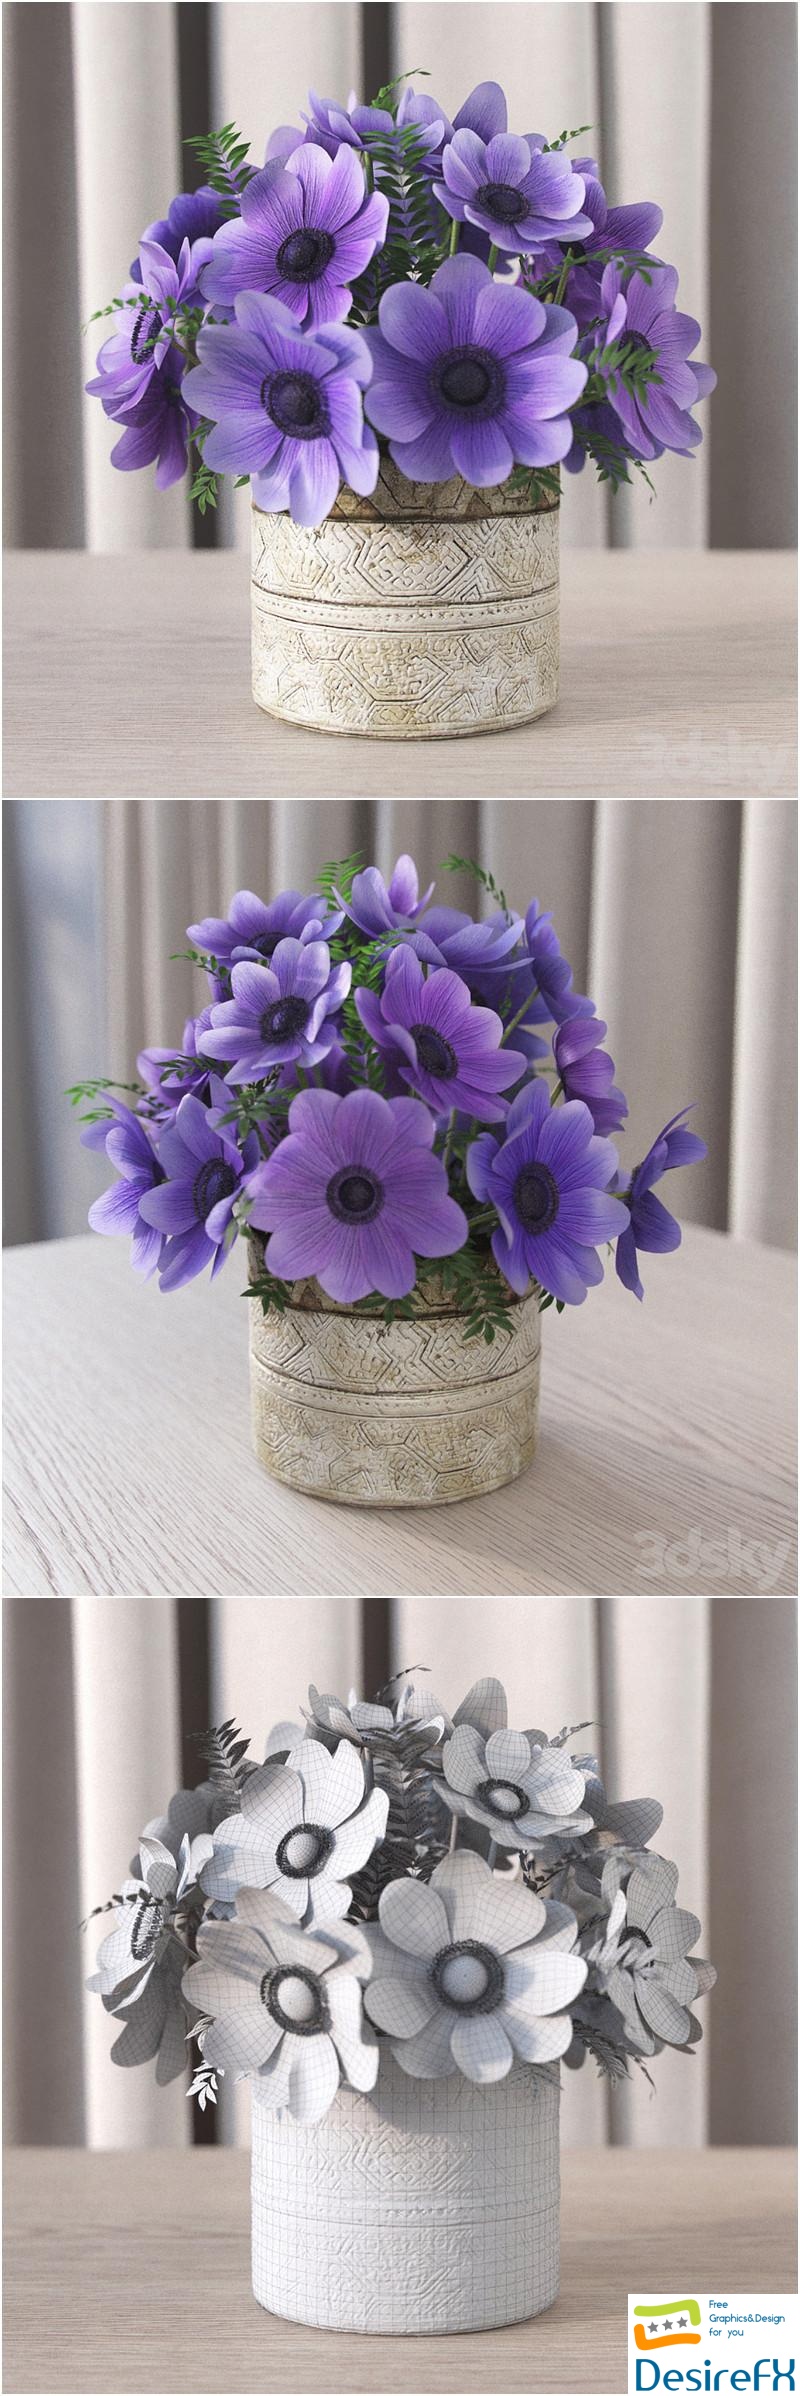 Flowers in a Vase 3 3D Model